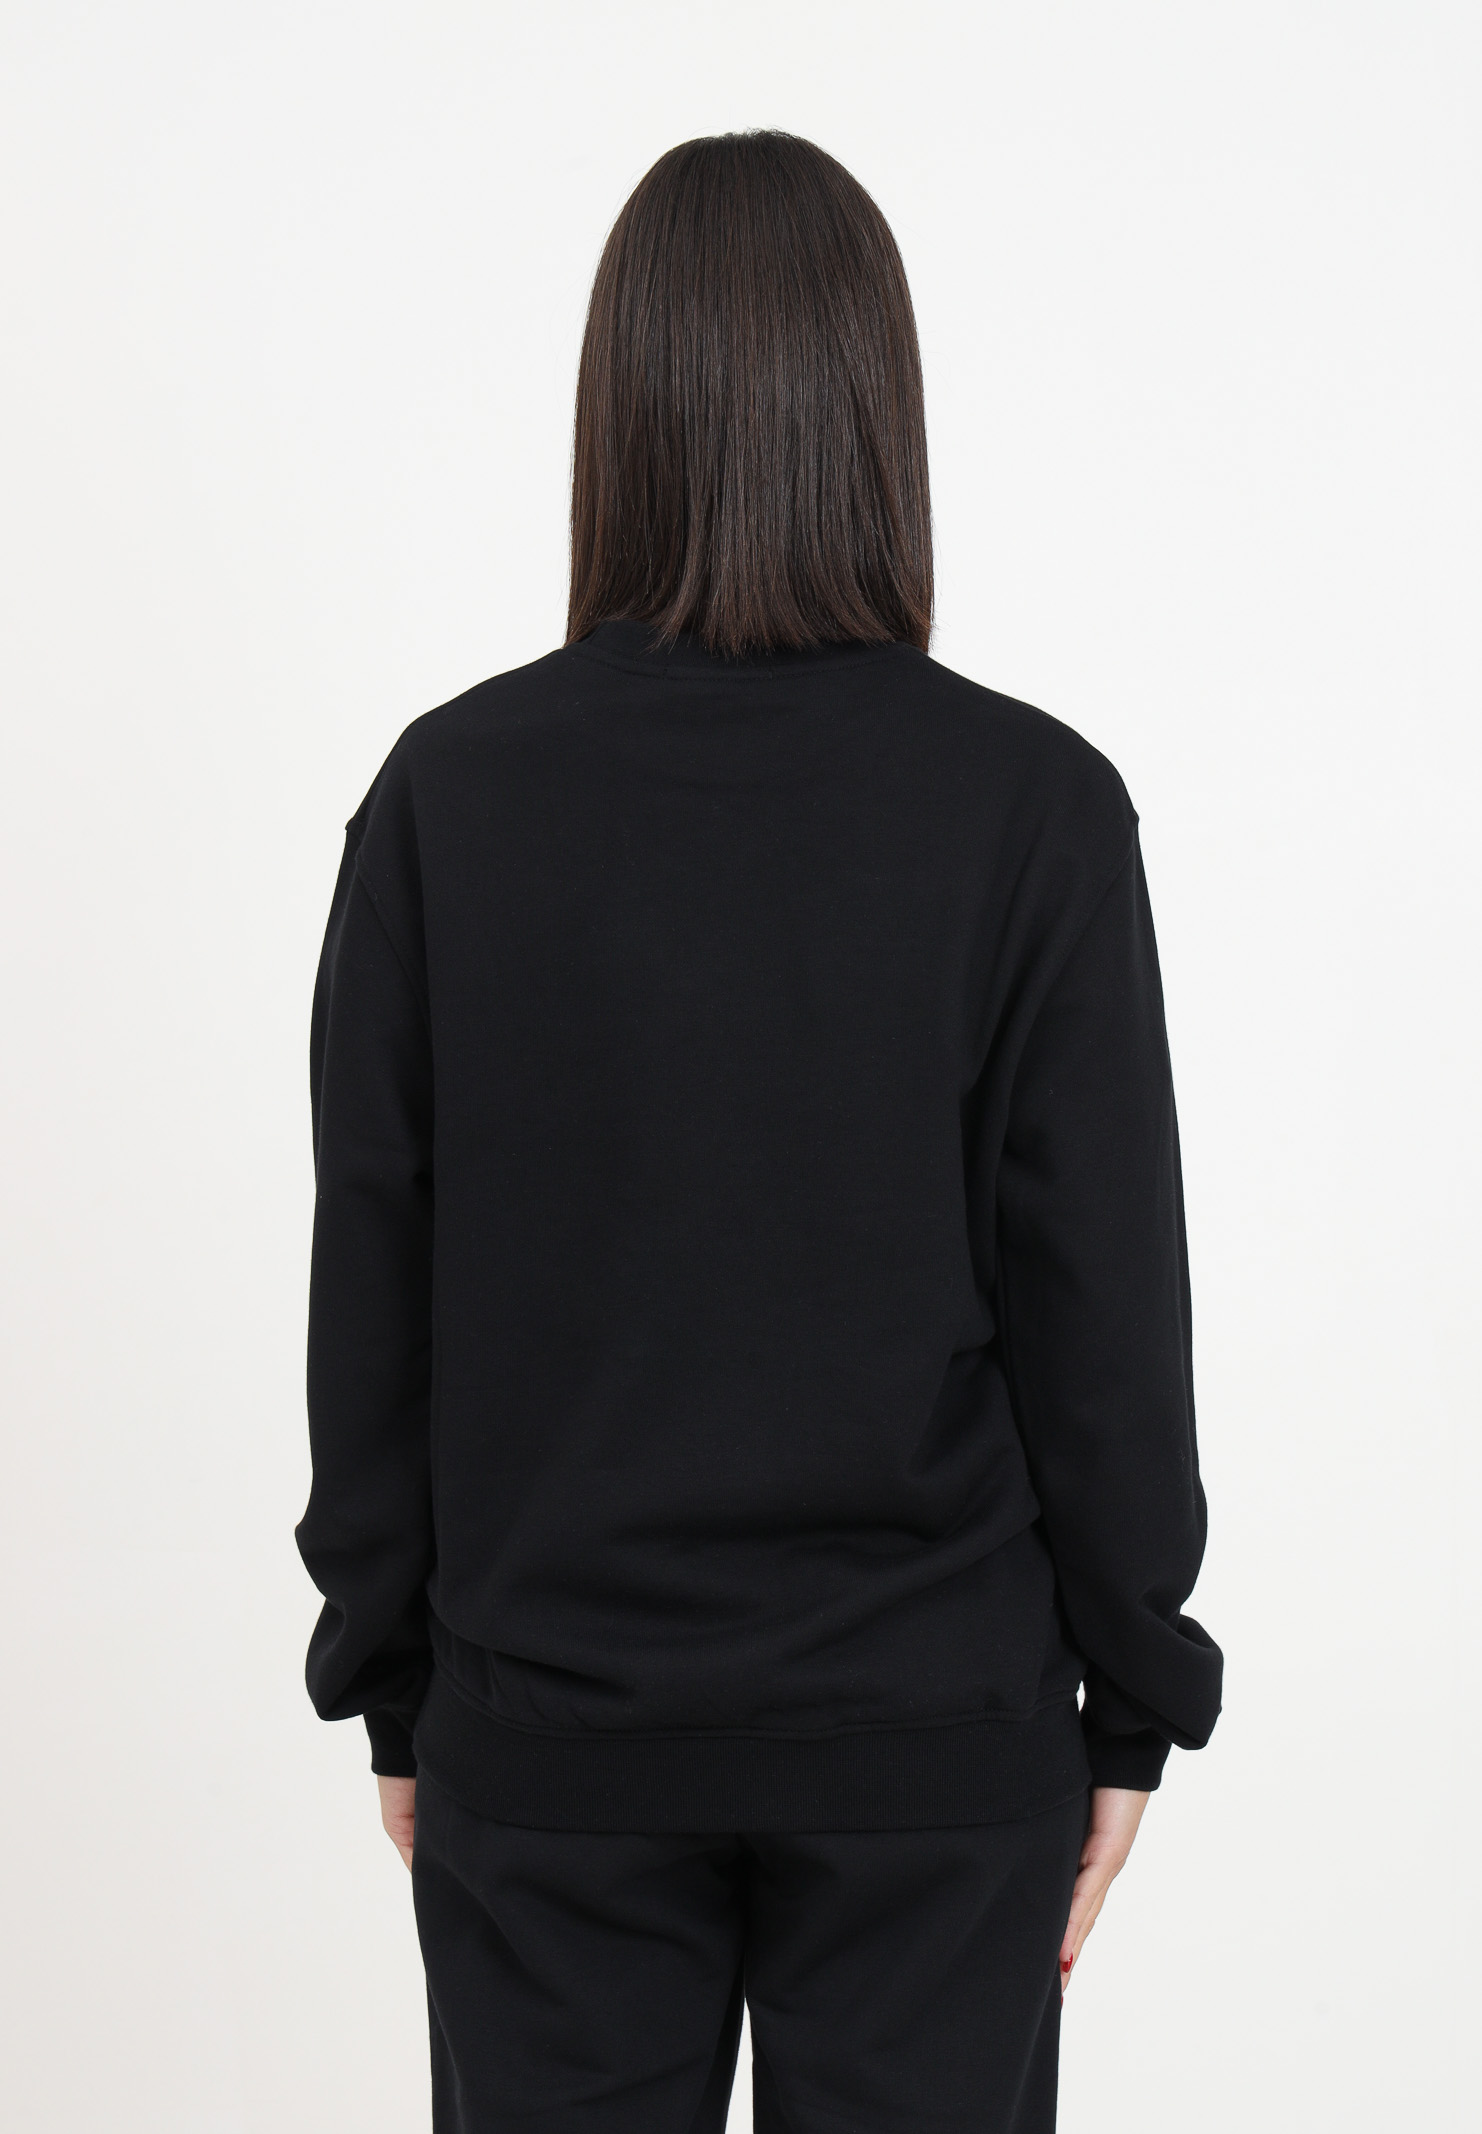 Black crew neck sweatshirt with women's logo HINNOMINATE | HNW902NERO